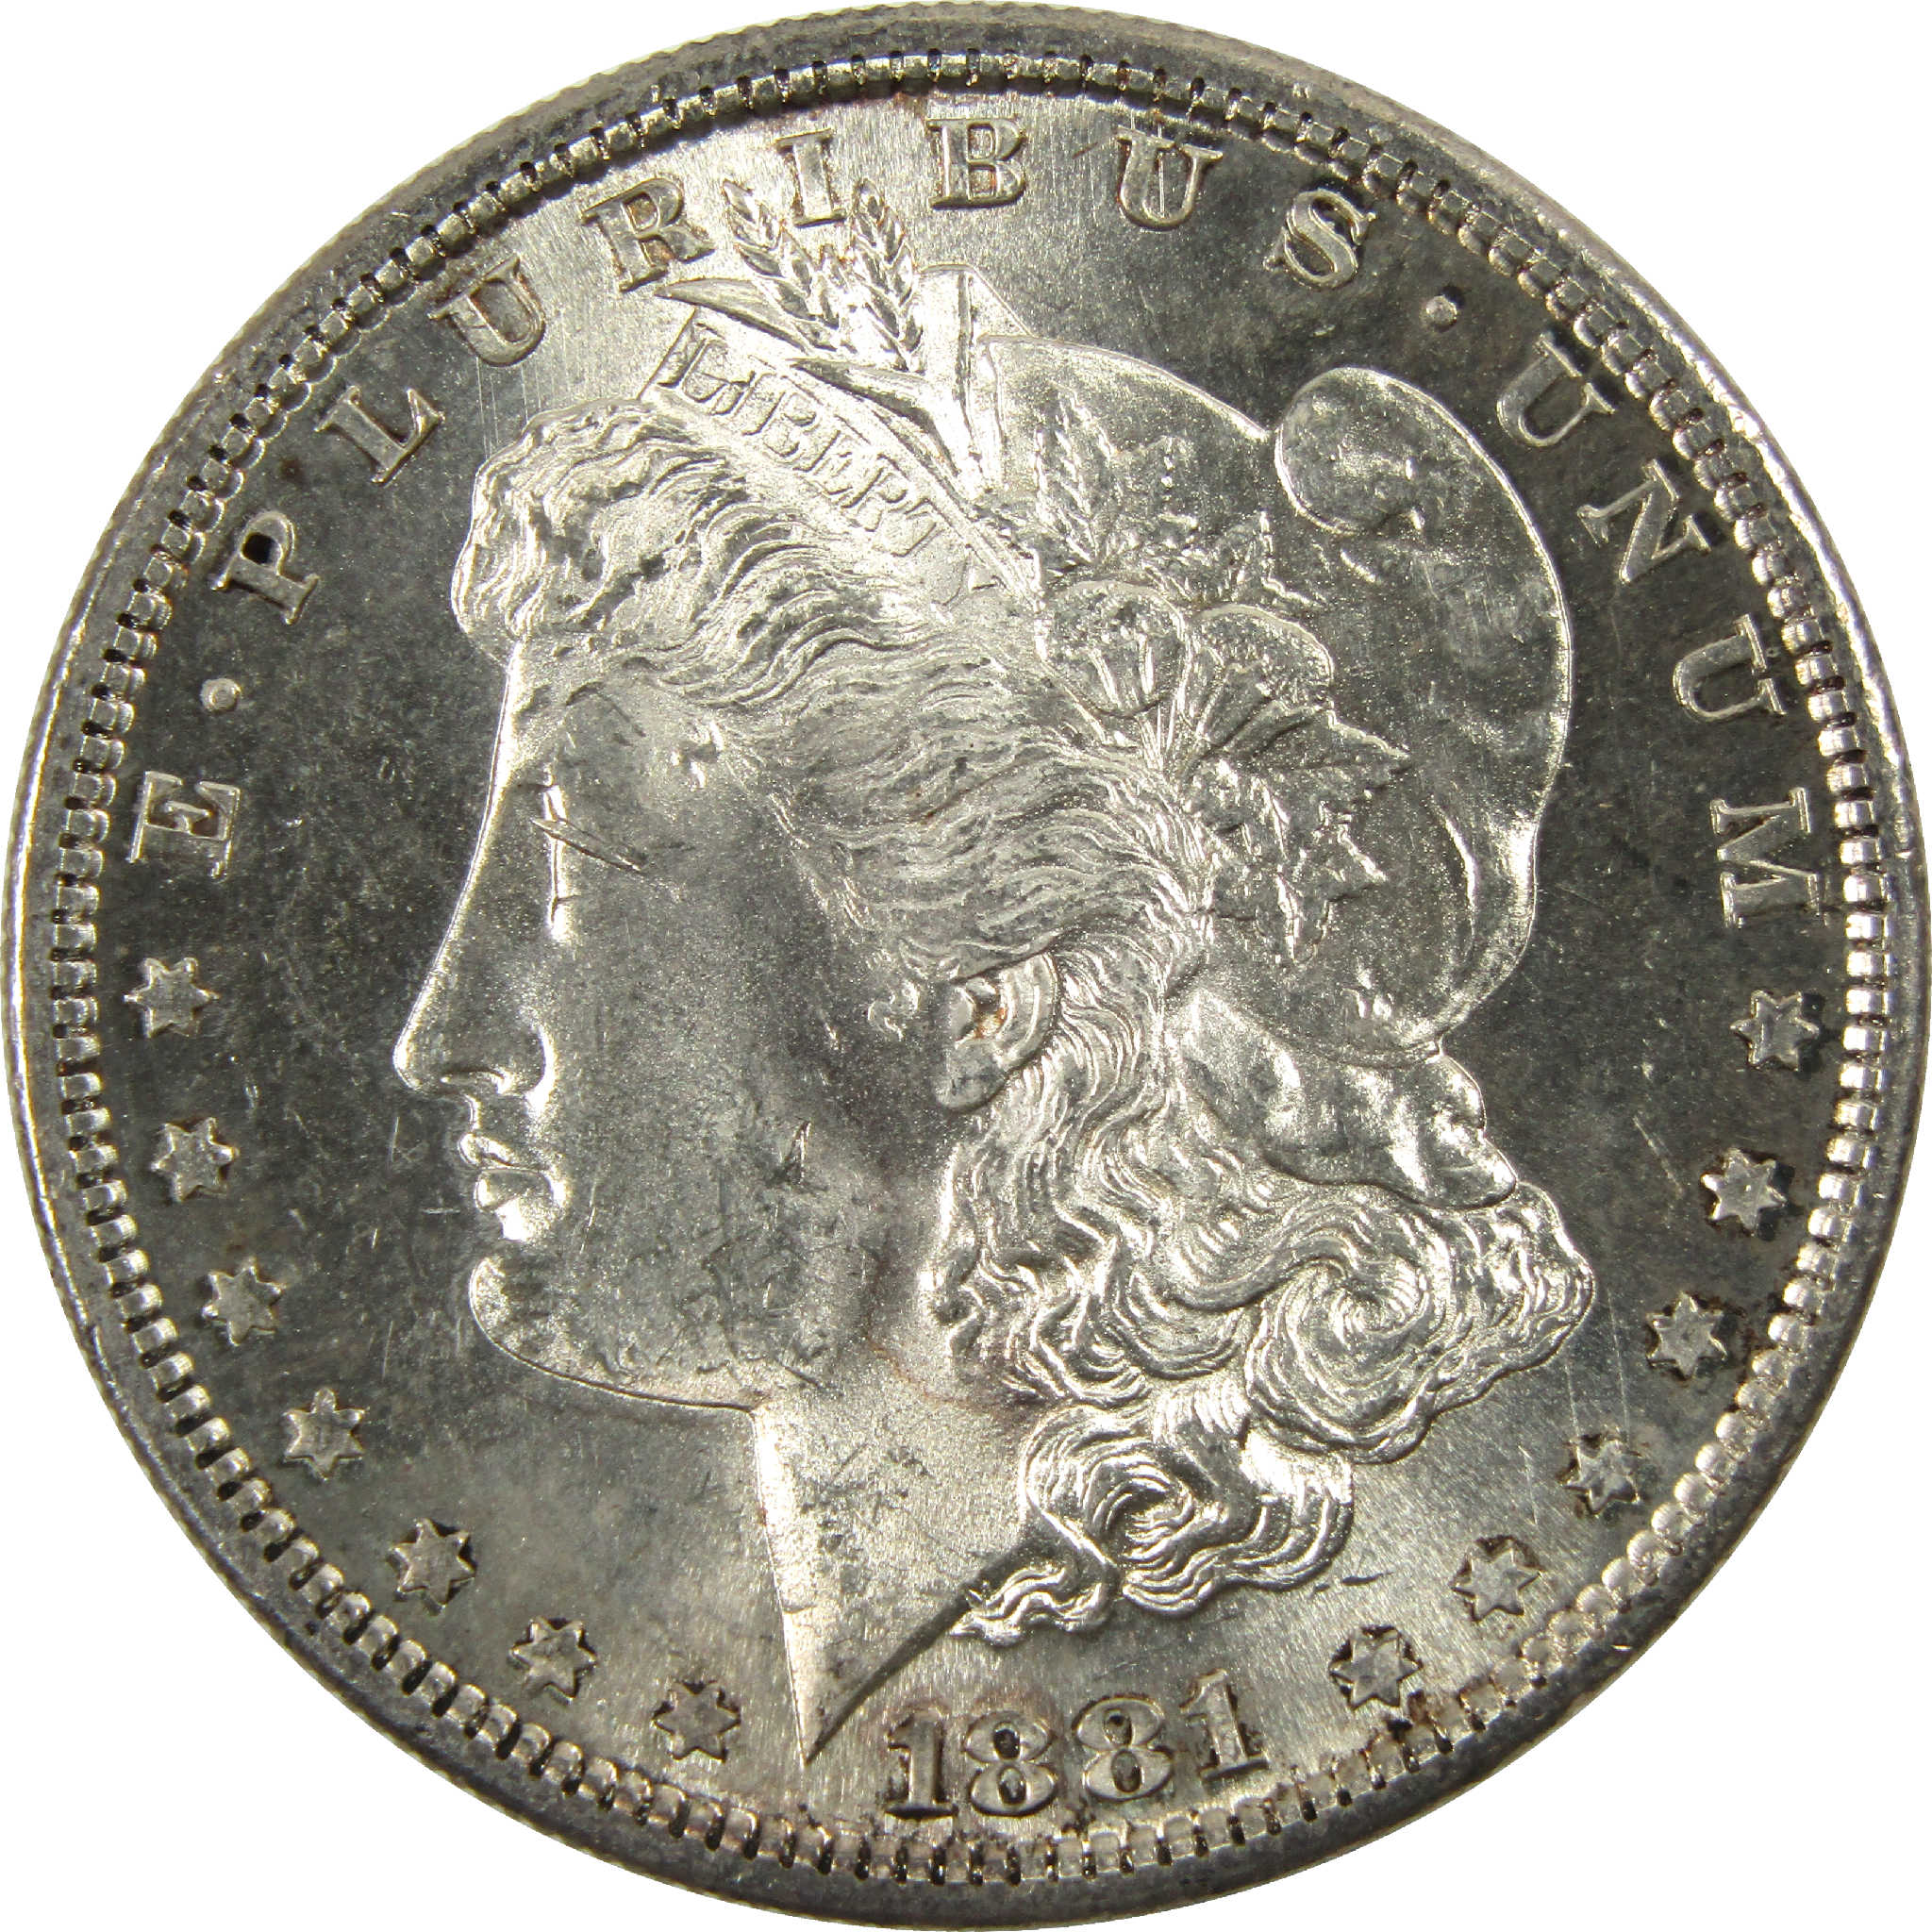 1881 S Morgan Dollar CH AU Choice About Uncirculated Silver $1 Coin - Morgan coin - Morgan silver dollar - Morgan silver dollar for sale - Profile Coins &amp; Collectibles